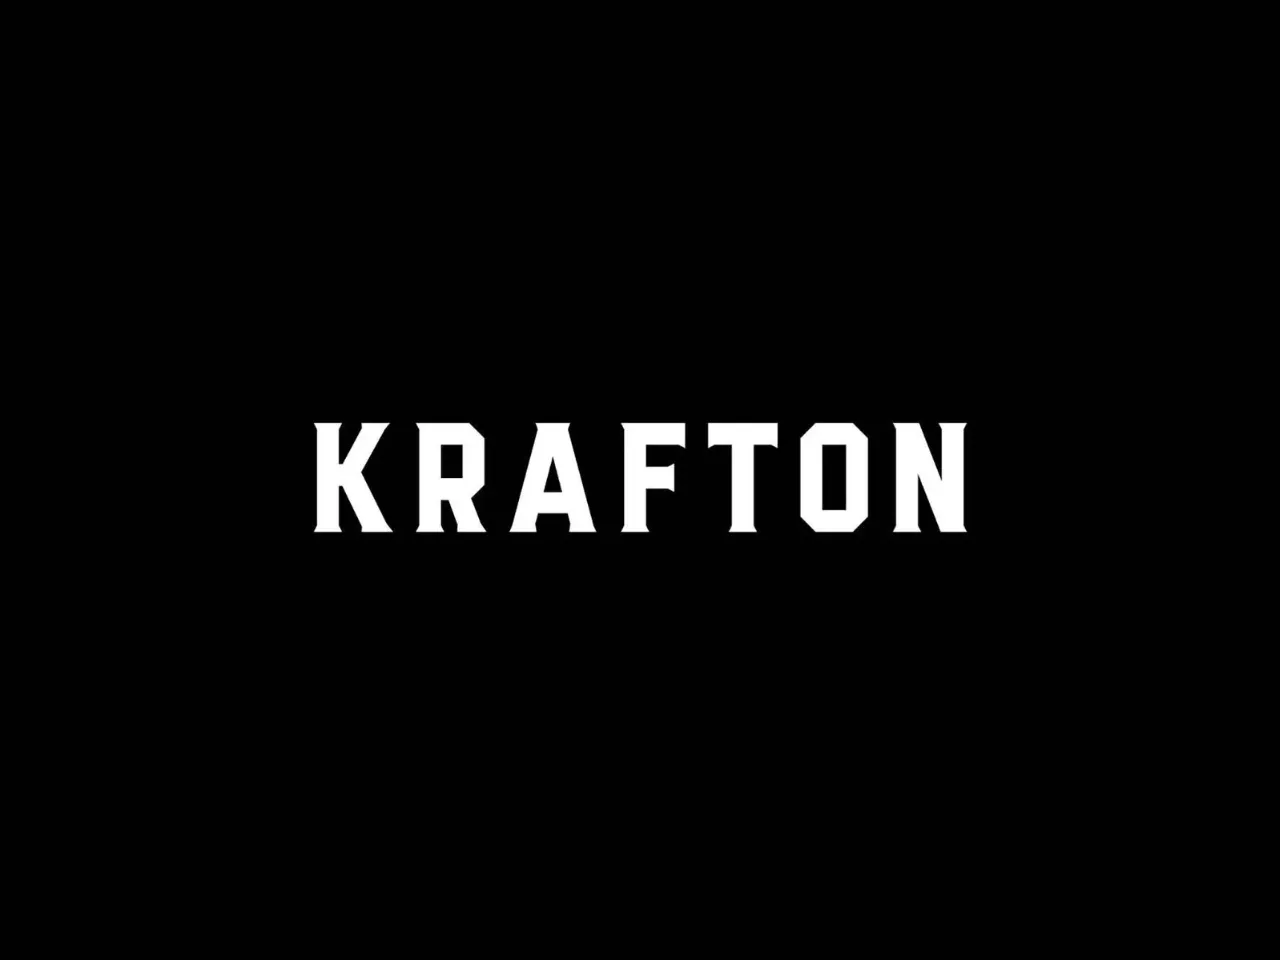 Krafton logo